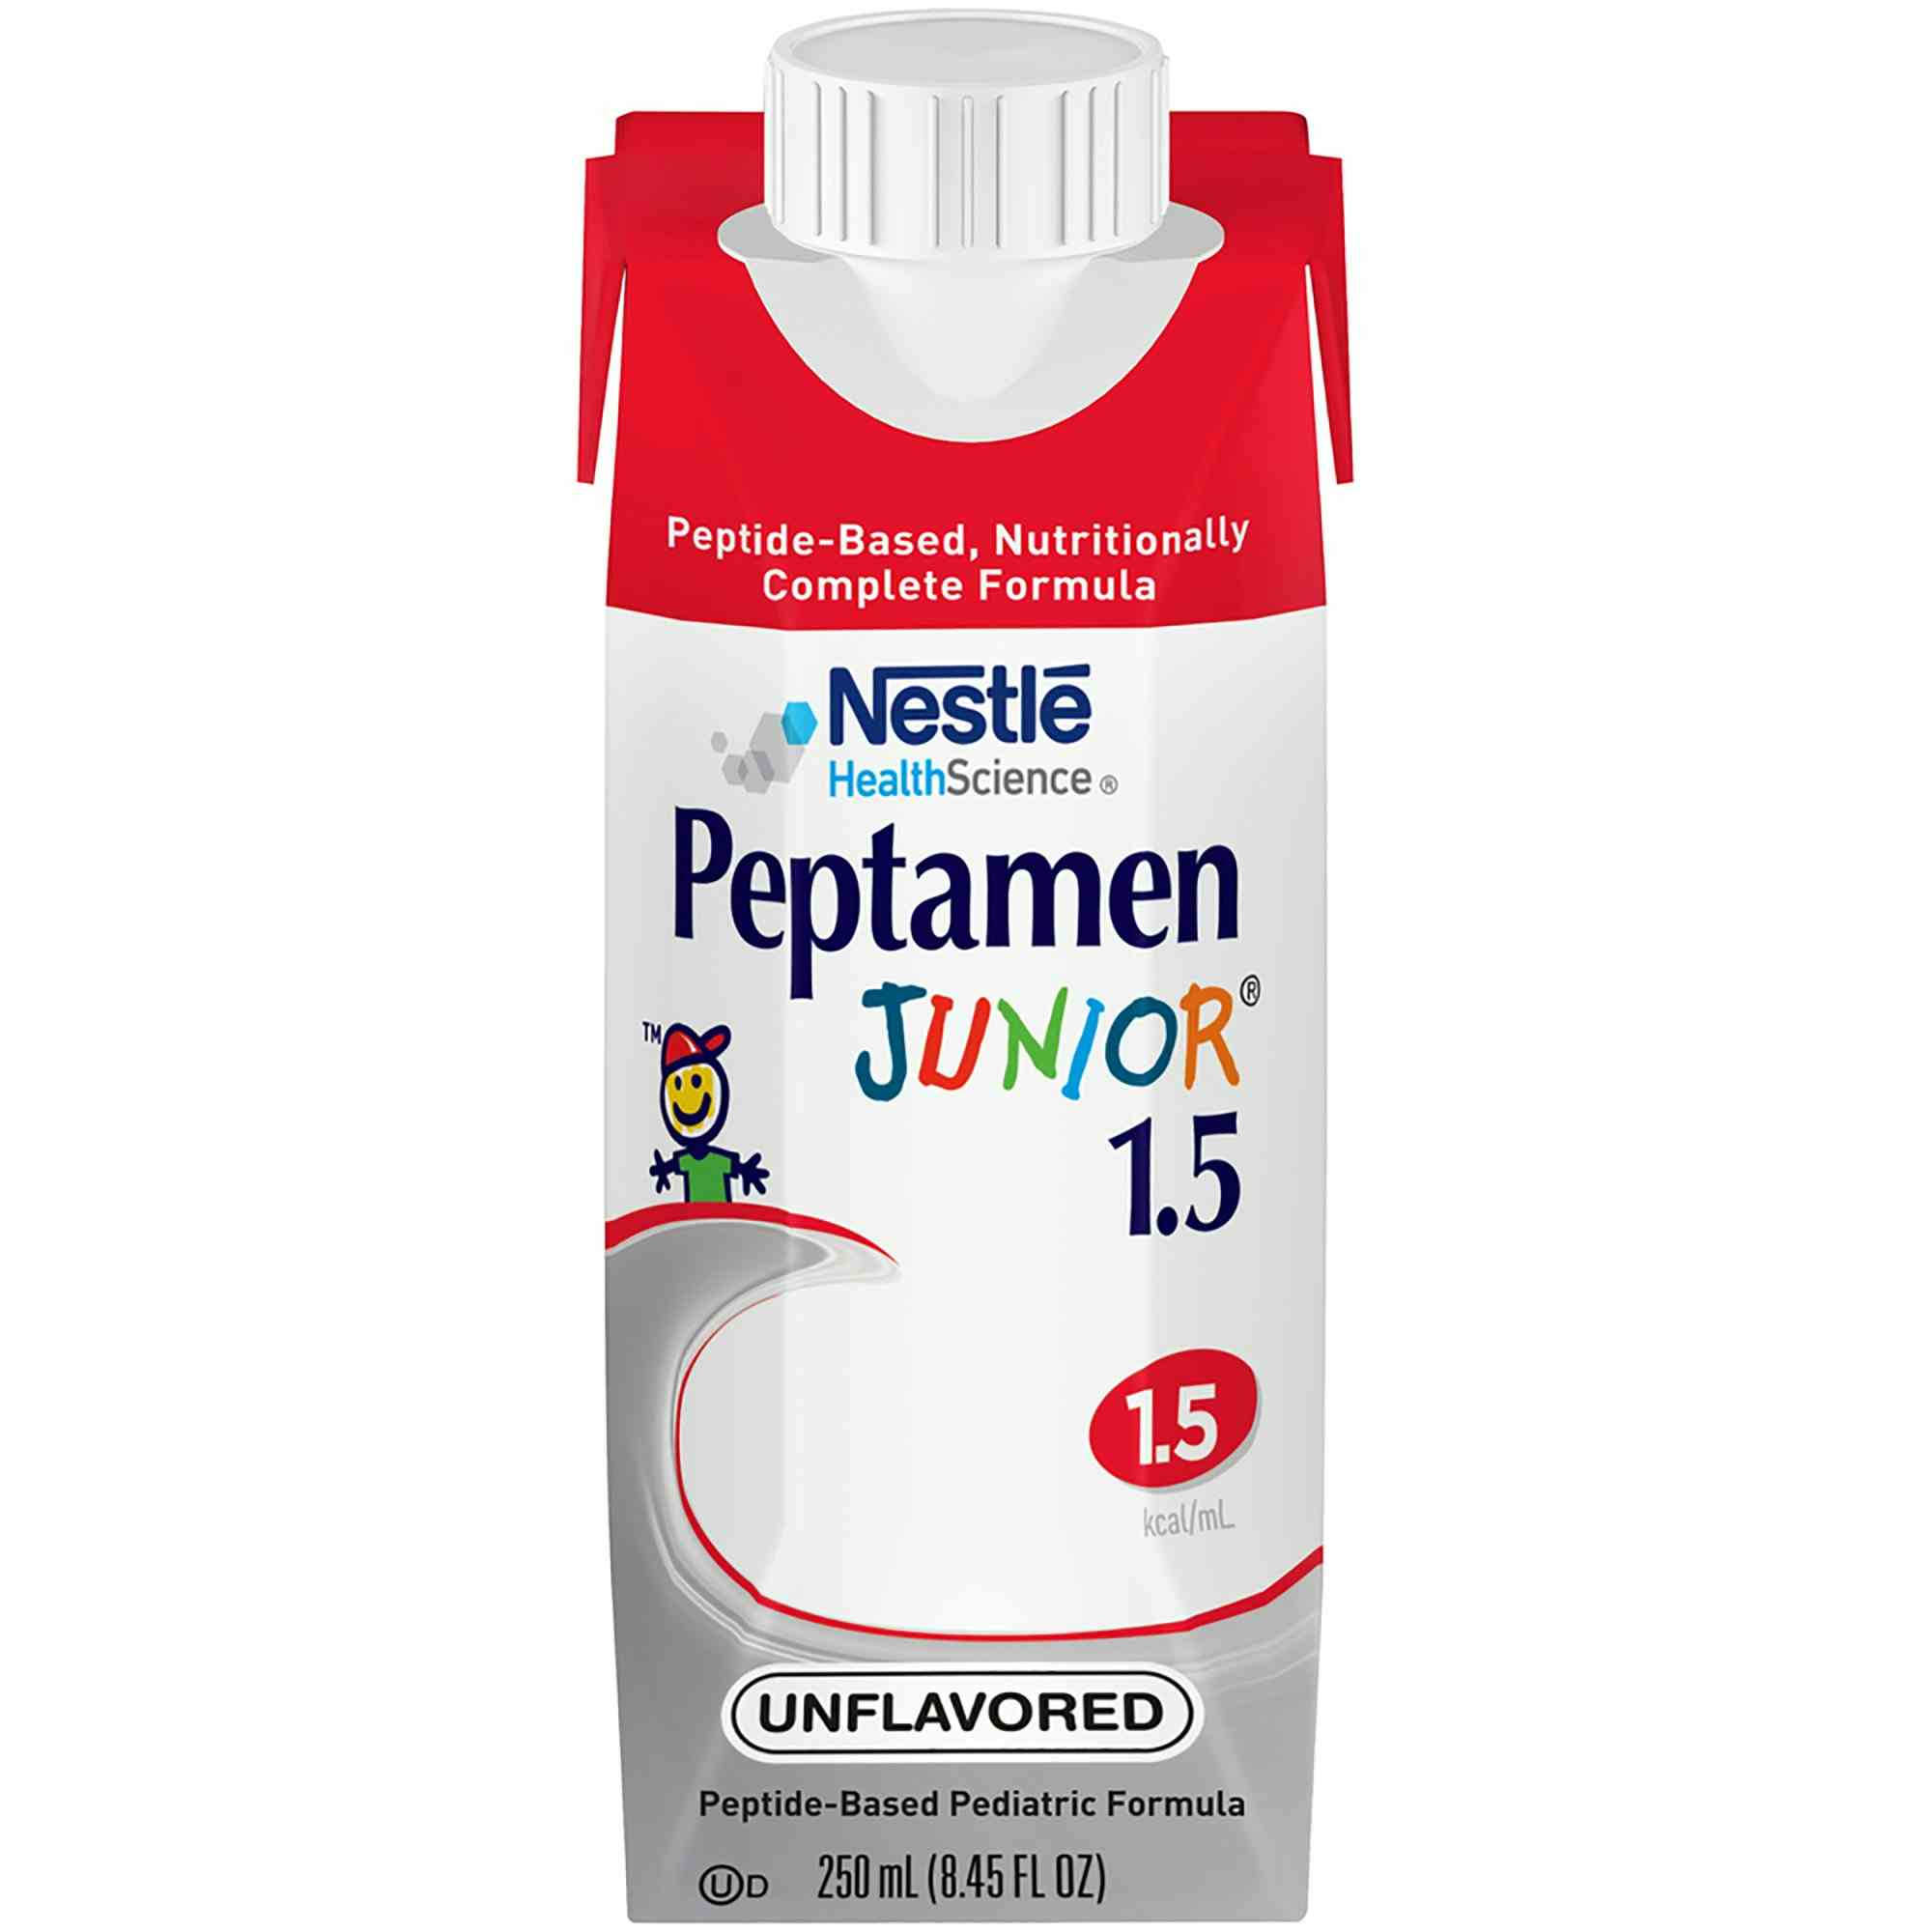 Nestle HealthScience Peptamen Junior 1.5 Peptide Based Nutritionally Complete Tube Feeding Formula, 8.45 oz, 00798716173636, Case of 24